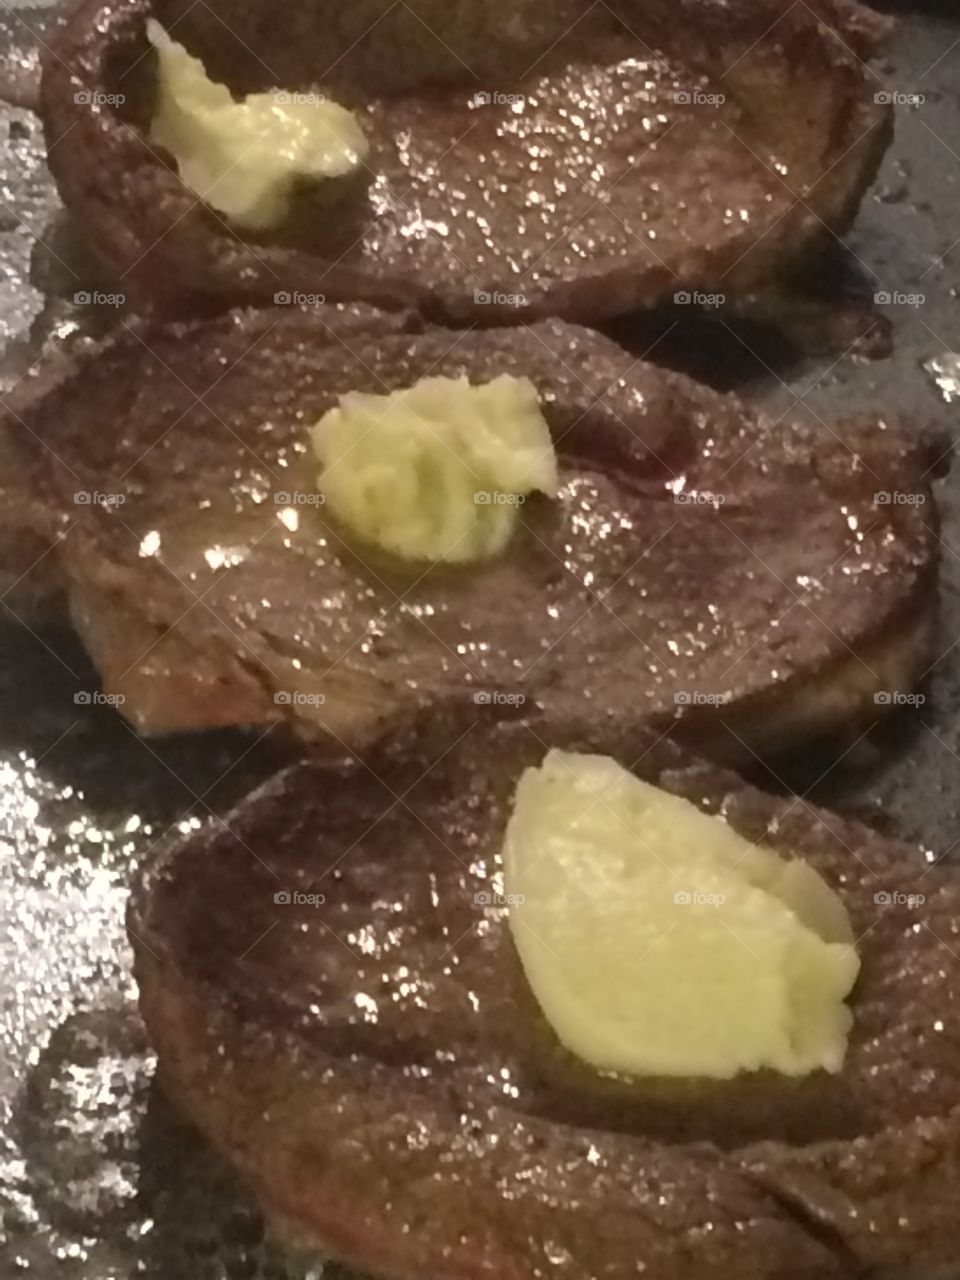 Buttered steak 